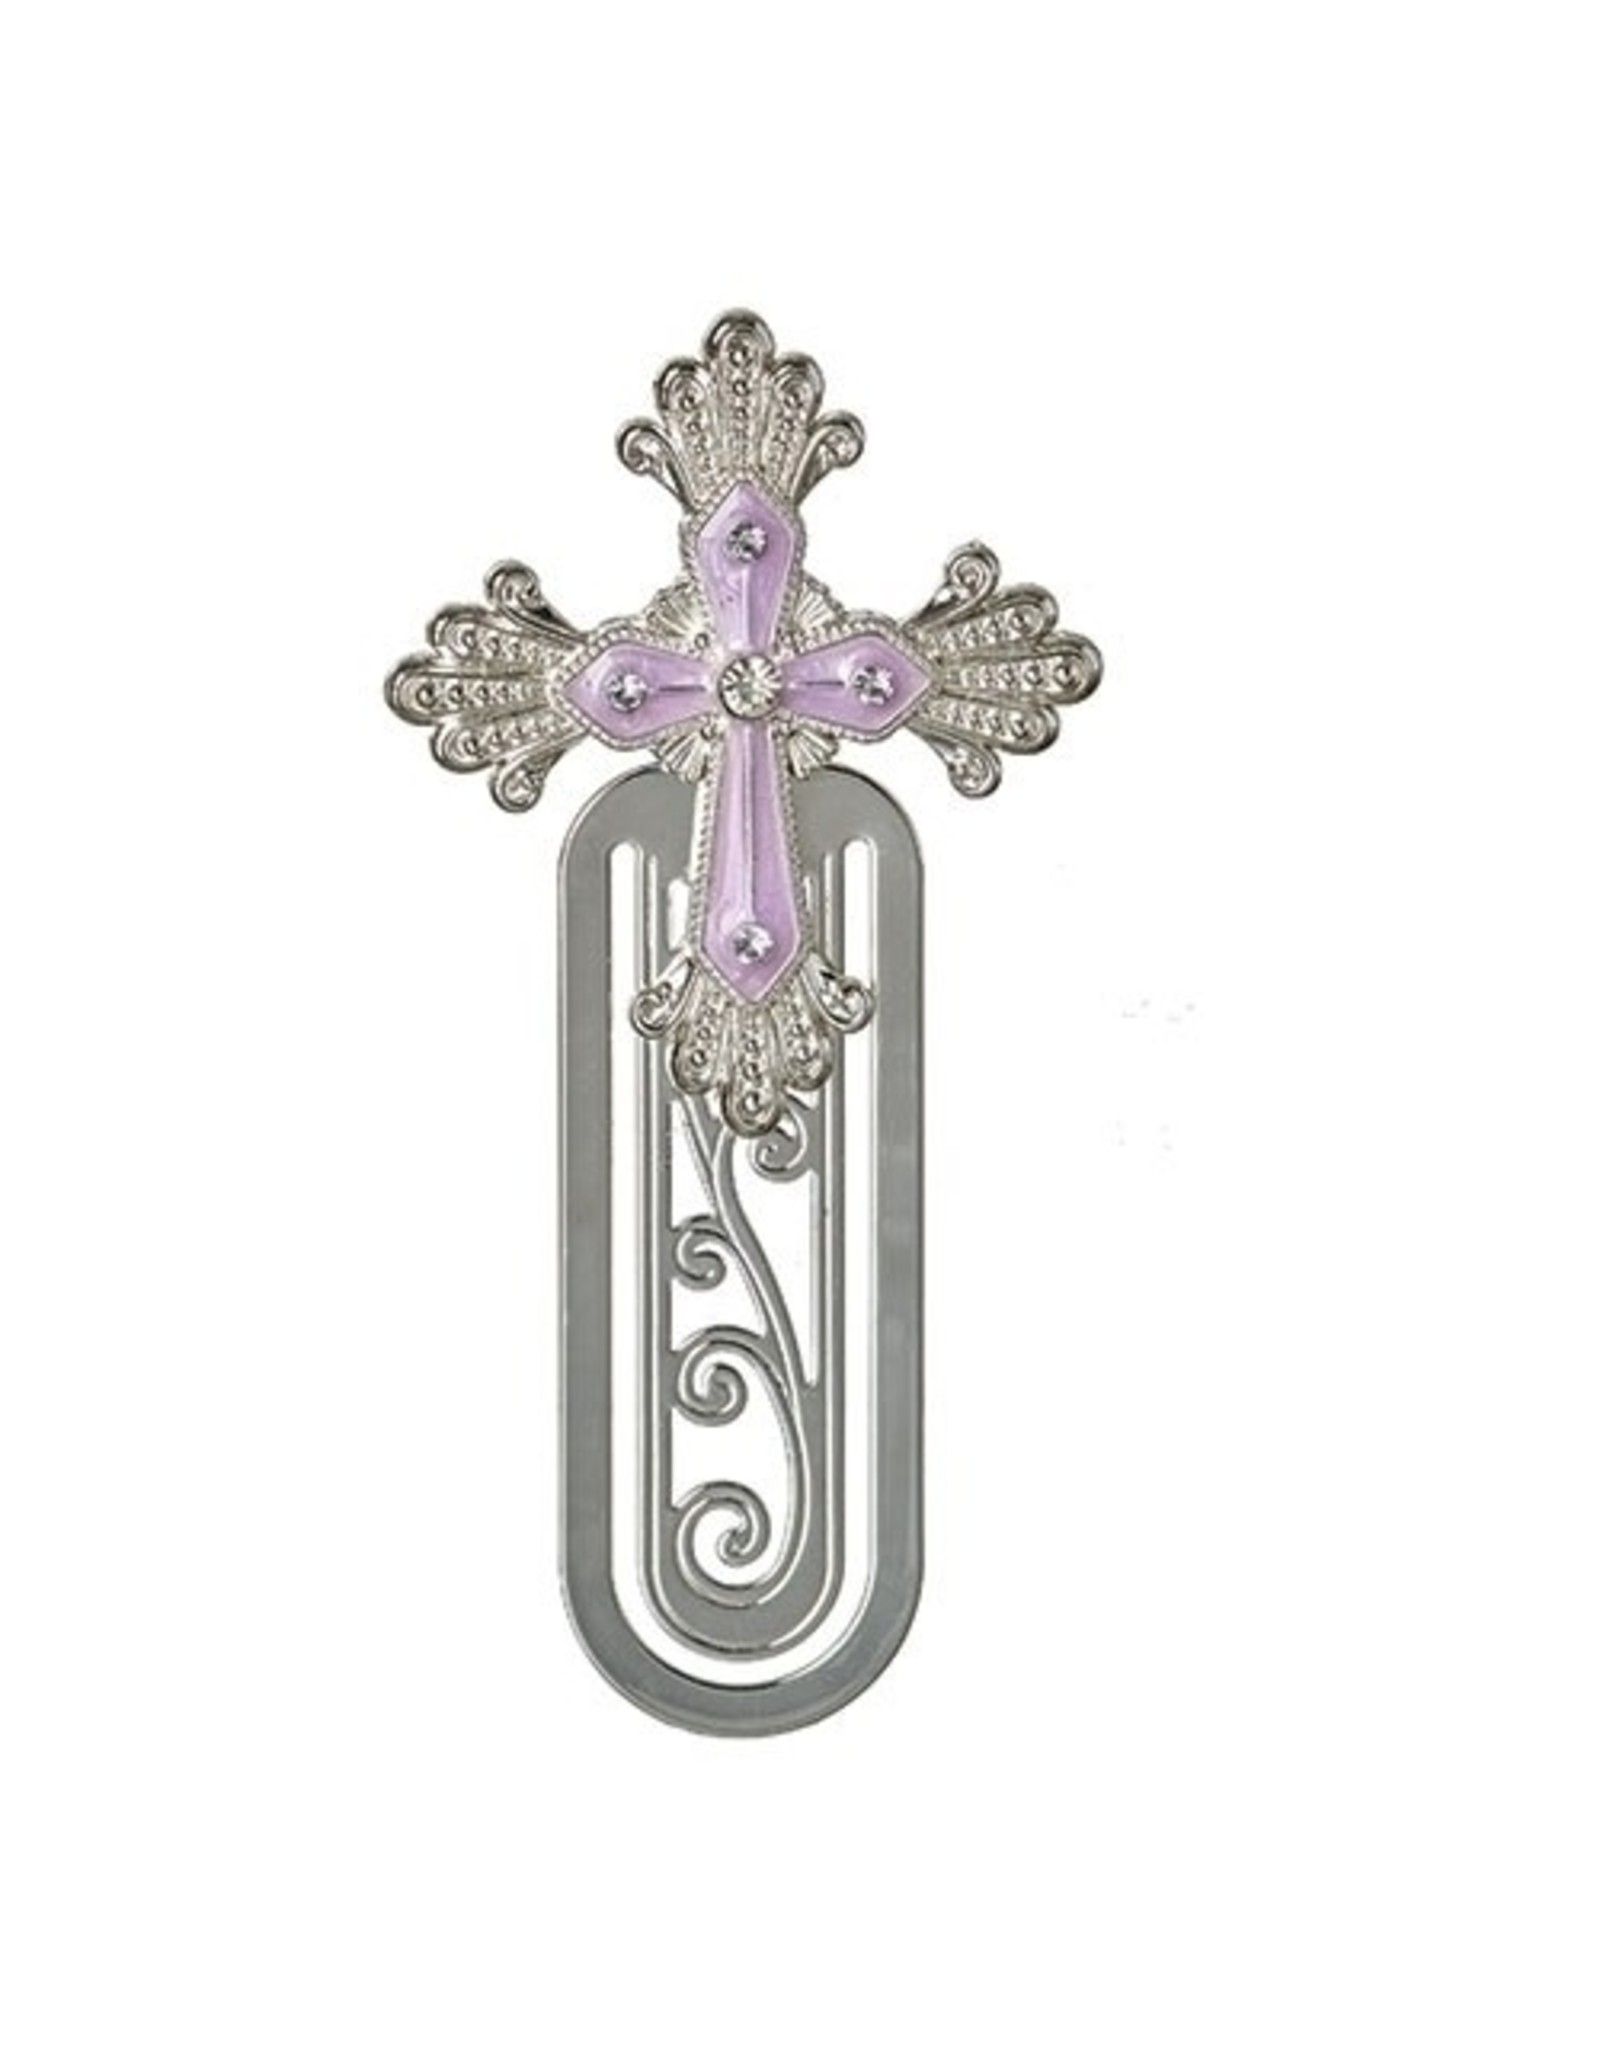 Birthstone Jeweled Cross Bookmark